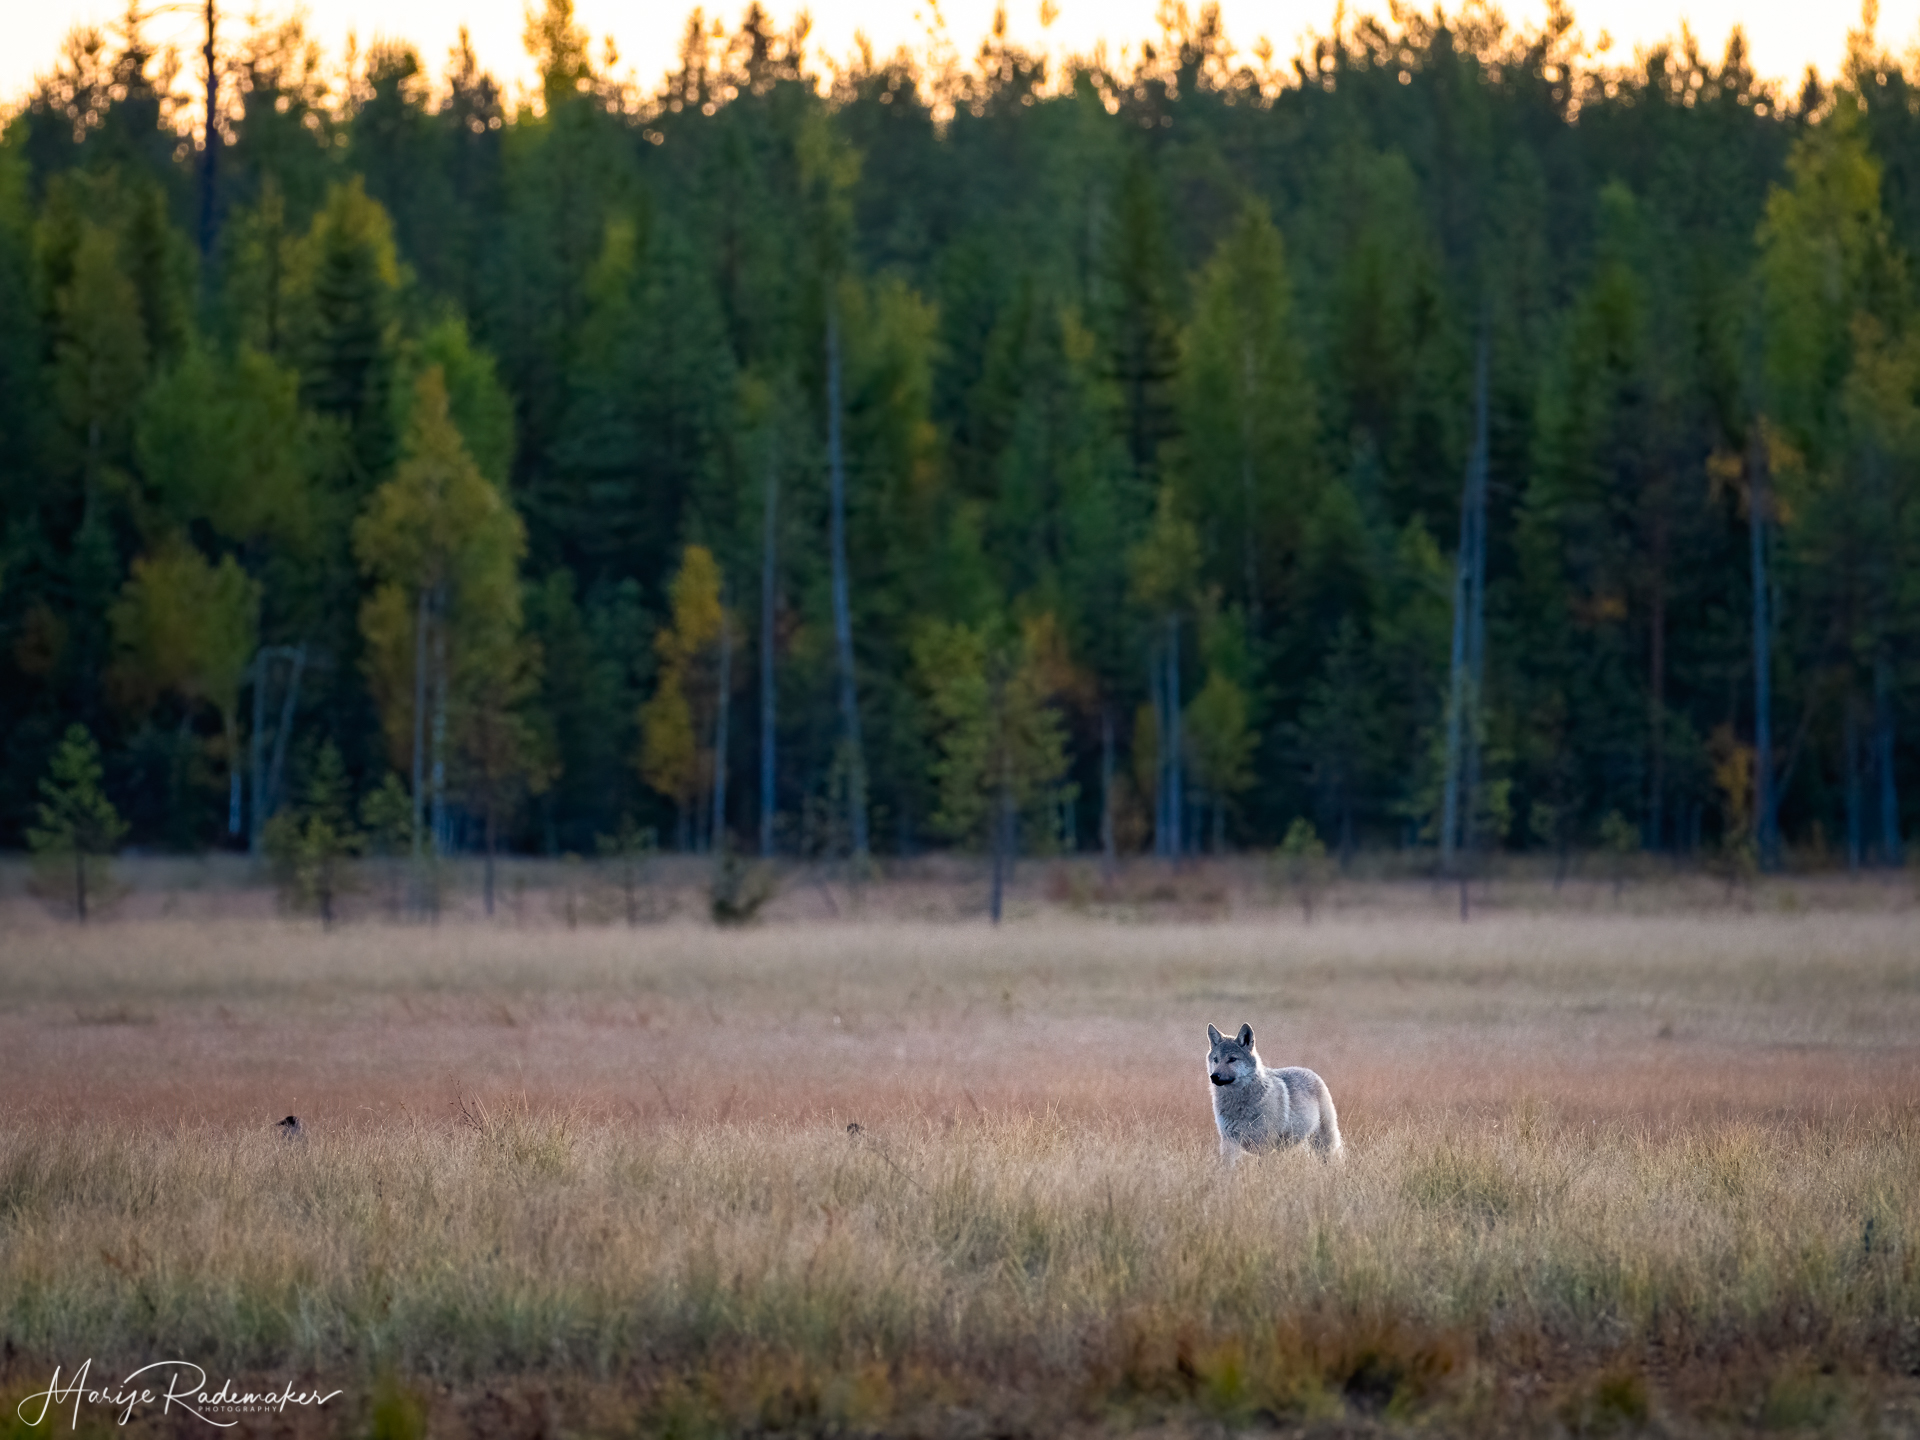 Captured at Wildlife Finland on 18 Sep, 2019 by Marije Rademaker